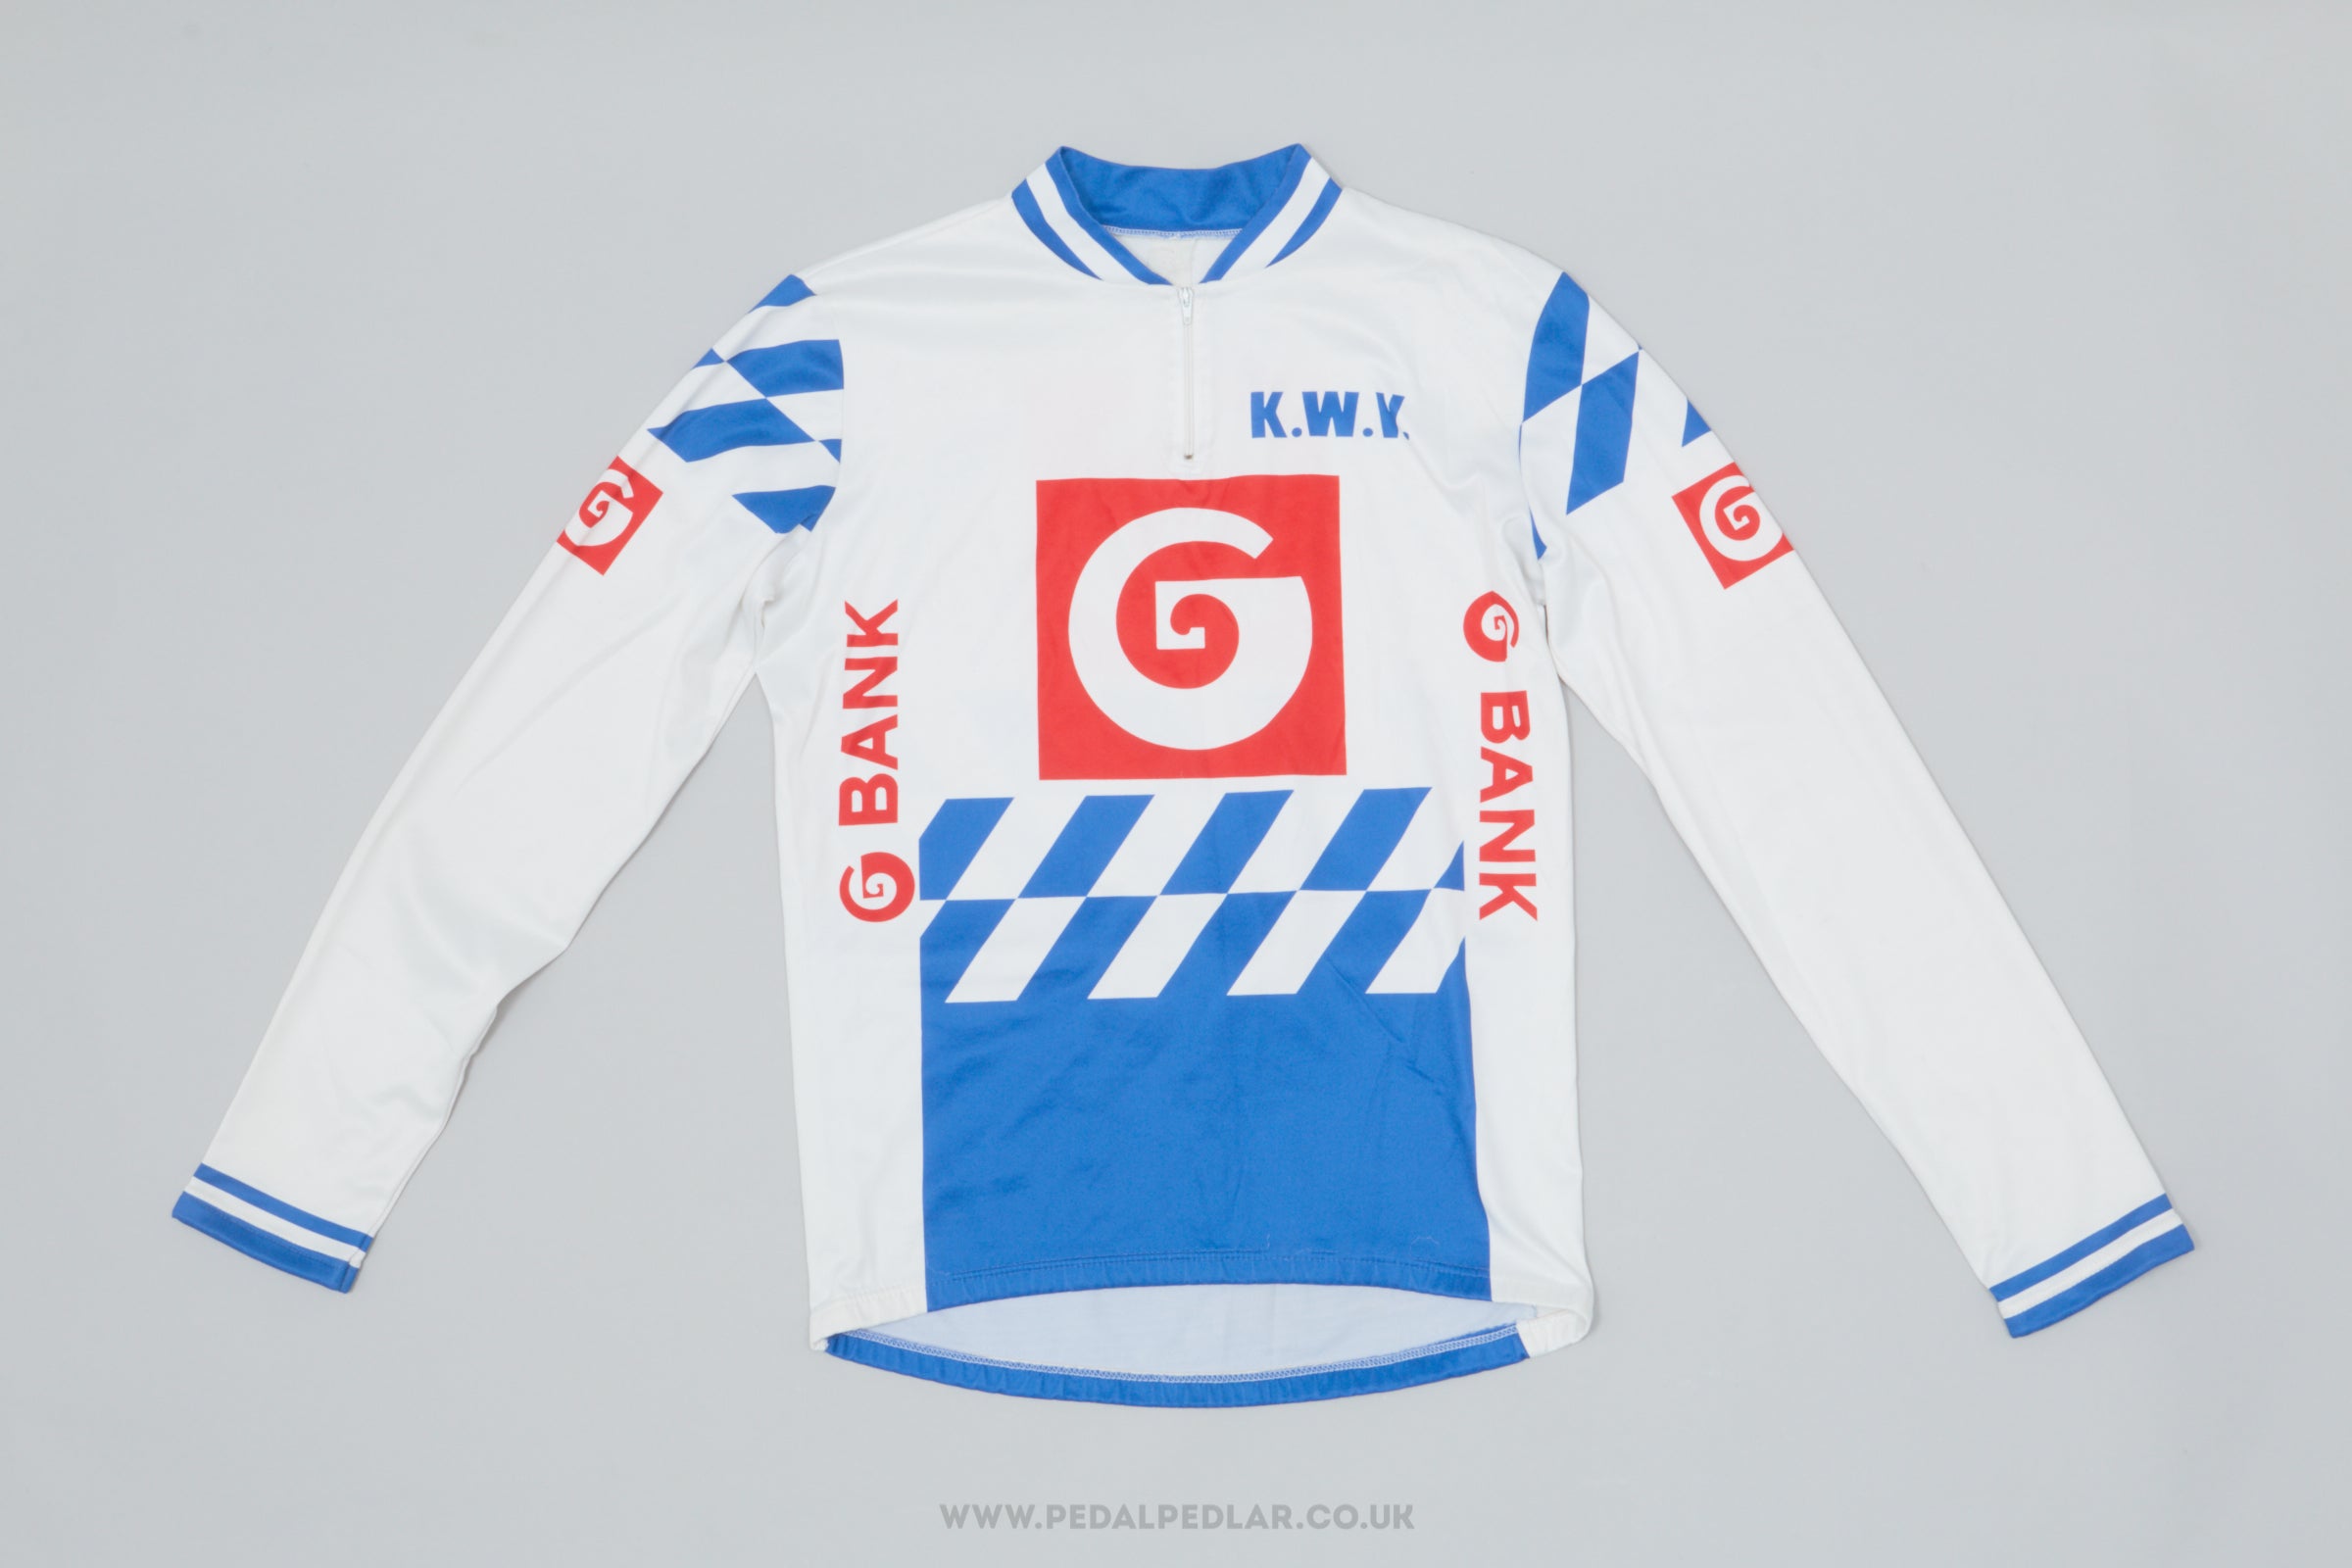 G Bank K.W.V. Medium Vintage Long Sleeved Cycling Jersey - Pedal Pedlar - Clothing For Sale